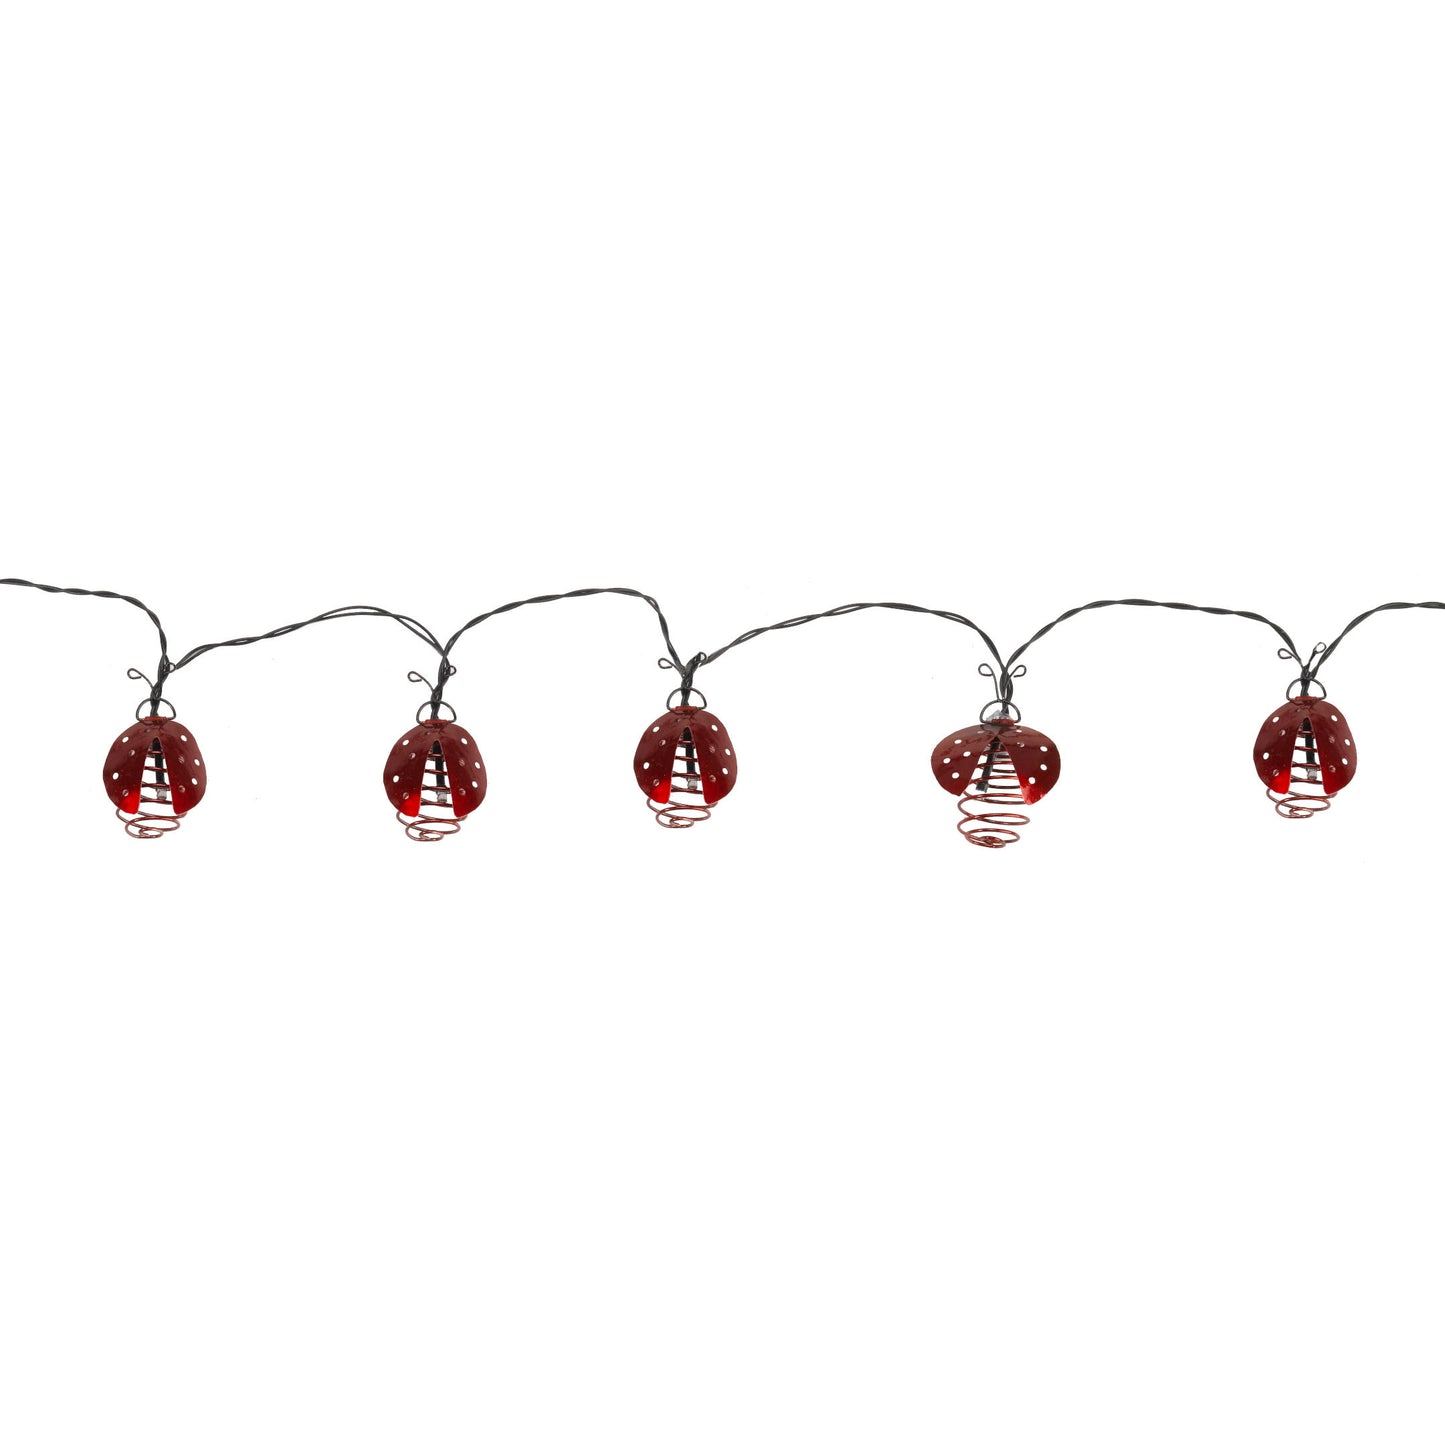 10 Ladybird String Lights ⸱ solárna svetelná reťaz